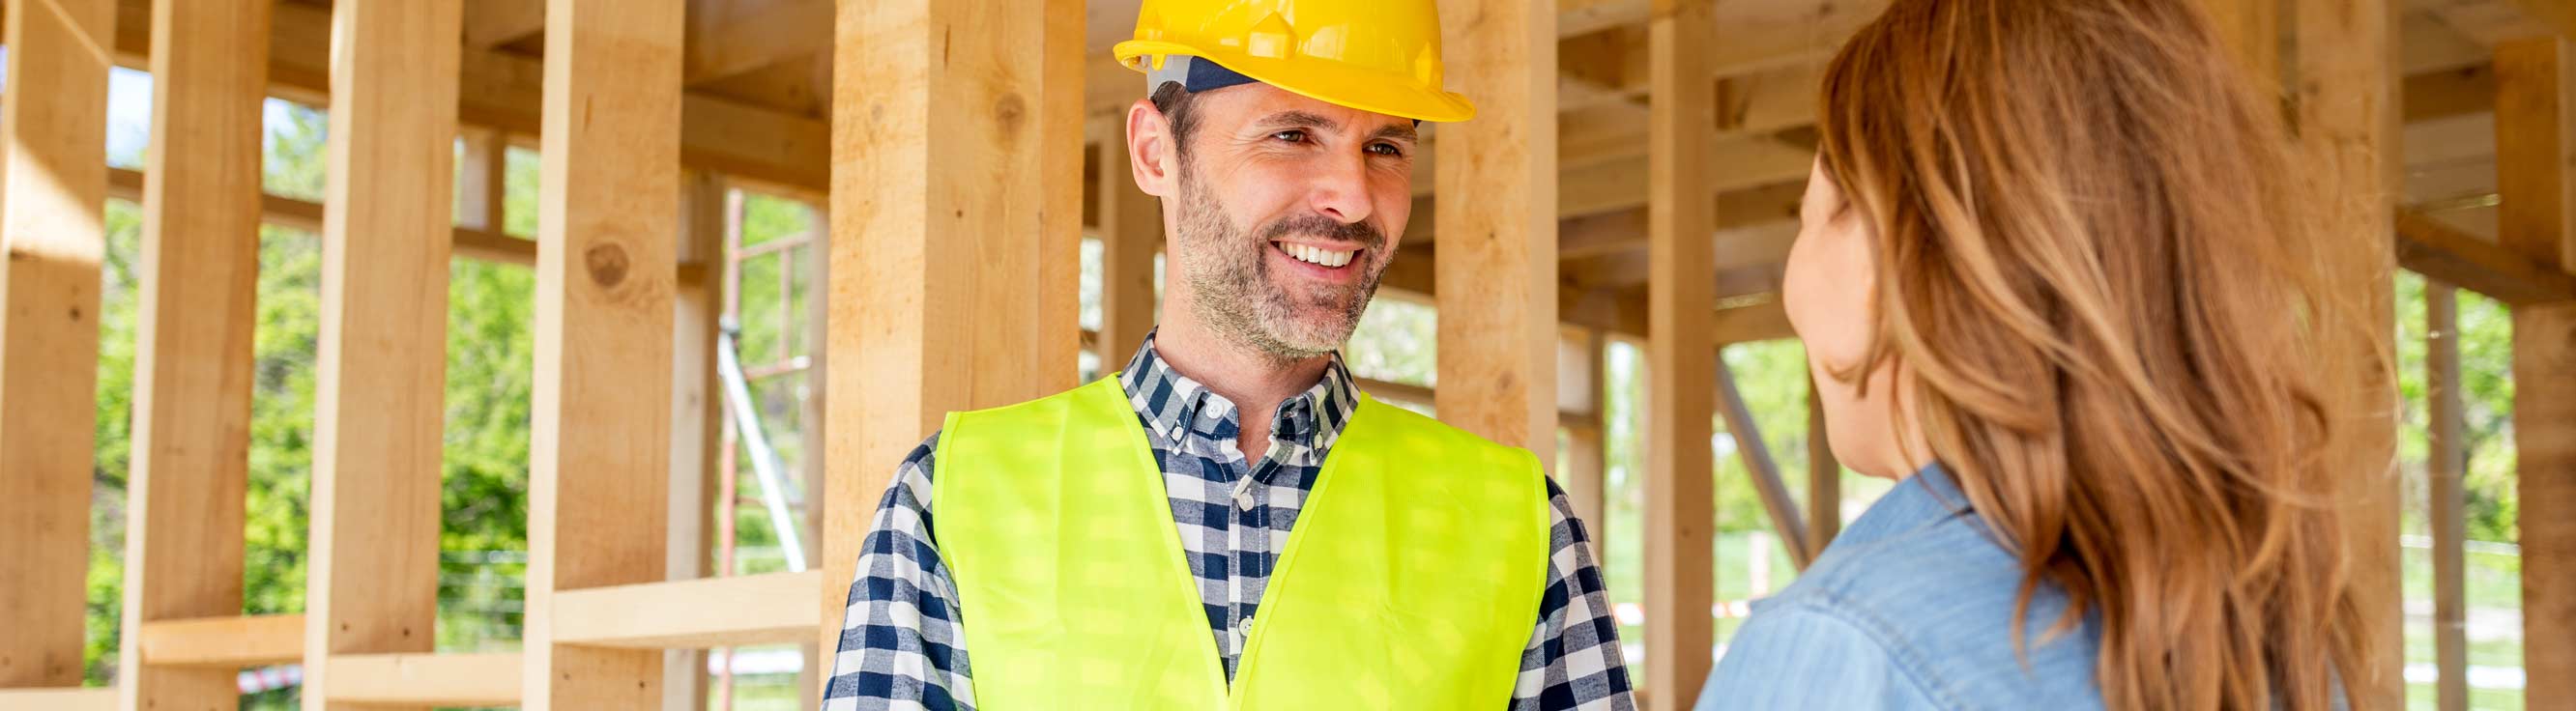 Home Construction Loans & Rates - Oklahoma - TTCU